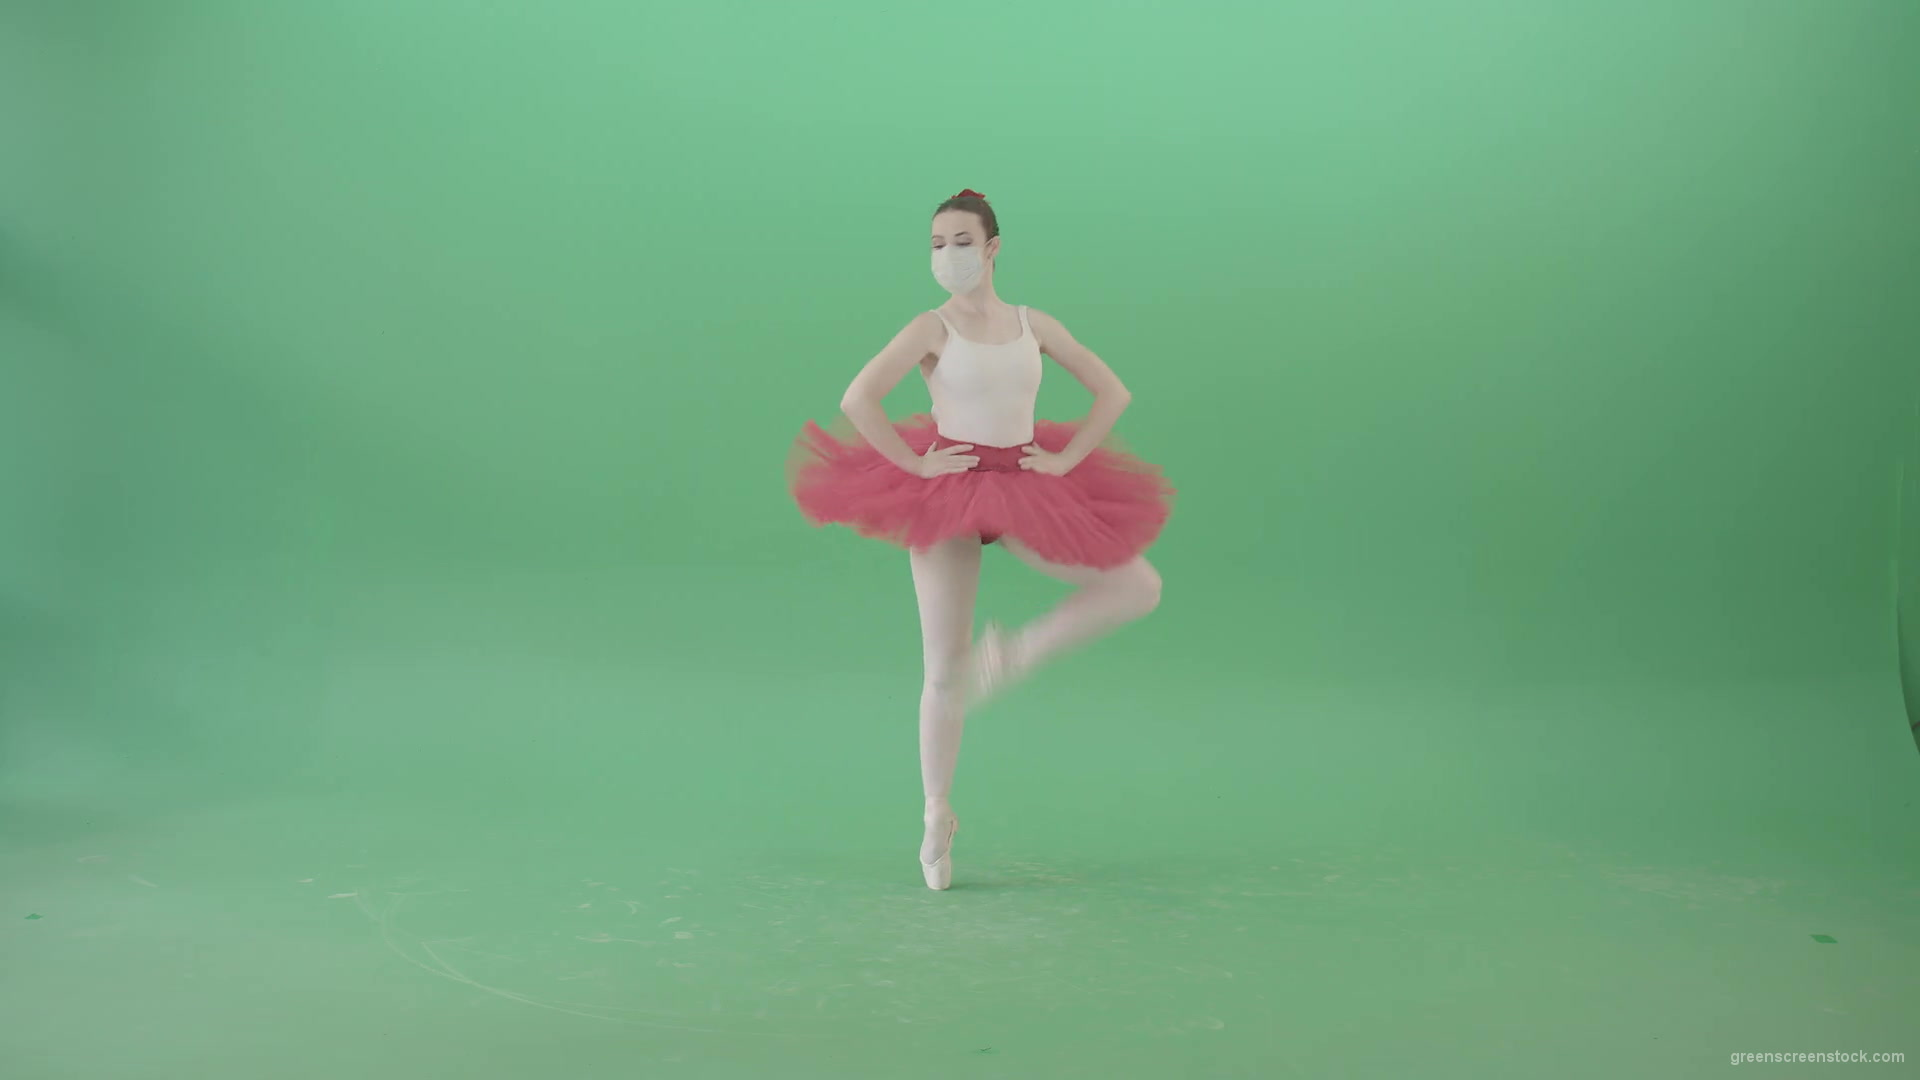 Ballet-Girl-in-Corona-Virus-Mask-Jumping-like-ballerina-isolated-on-green-screen-4K-Video-Footage-1920_002 Green Screen Stock